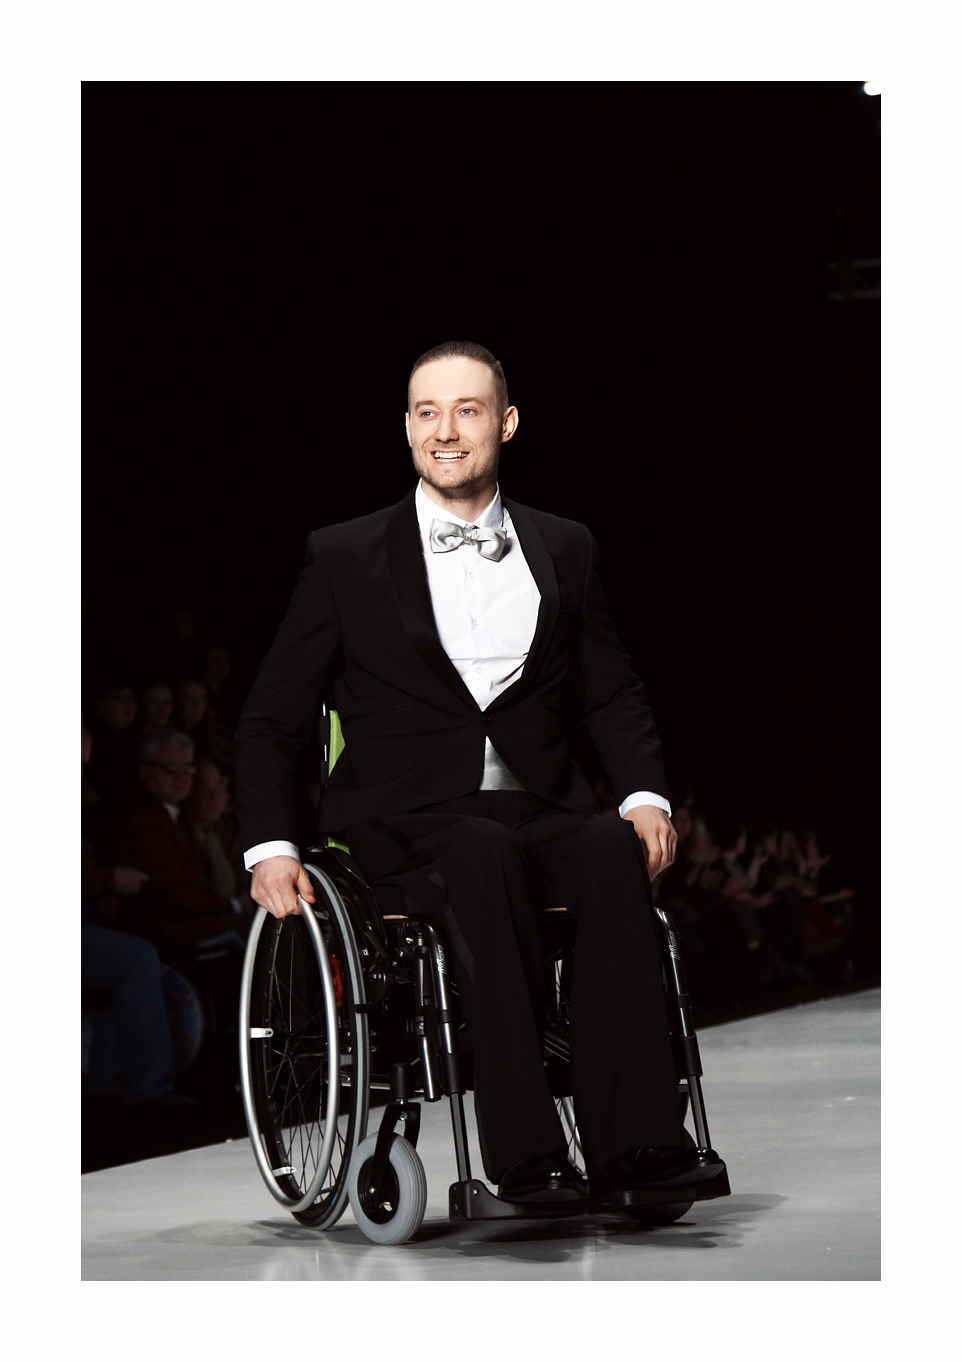 bezgraniz mbfw2014 cripple down's syndrome